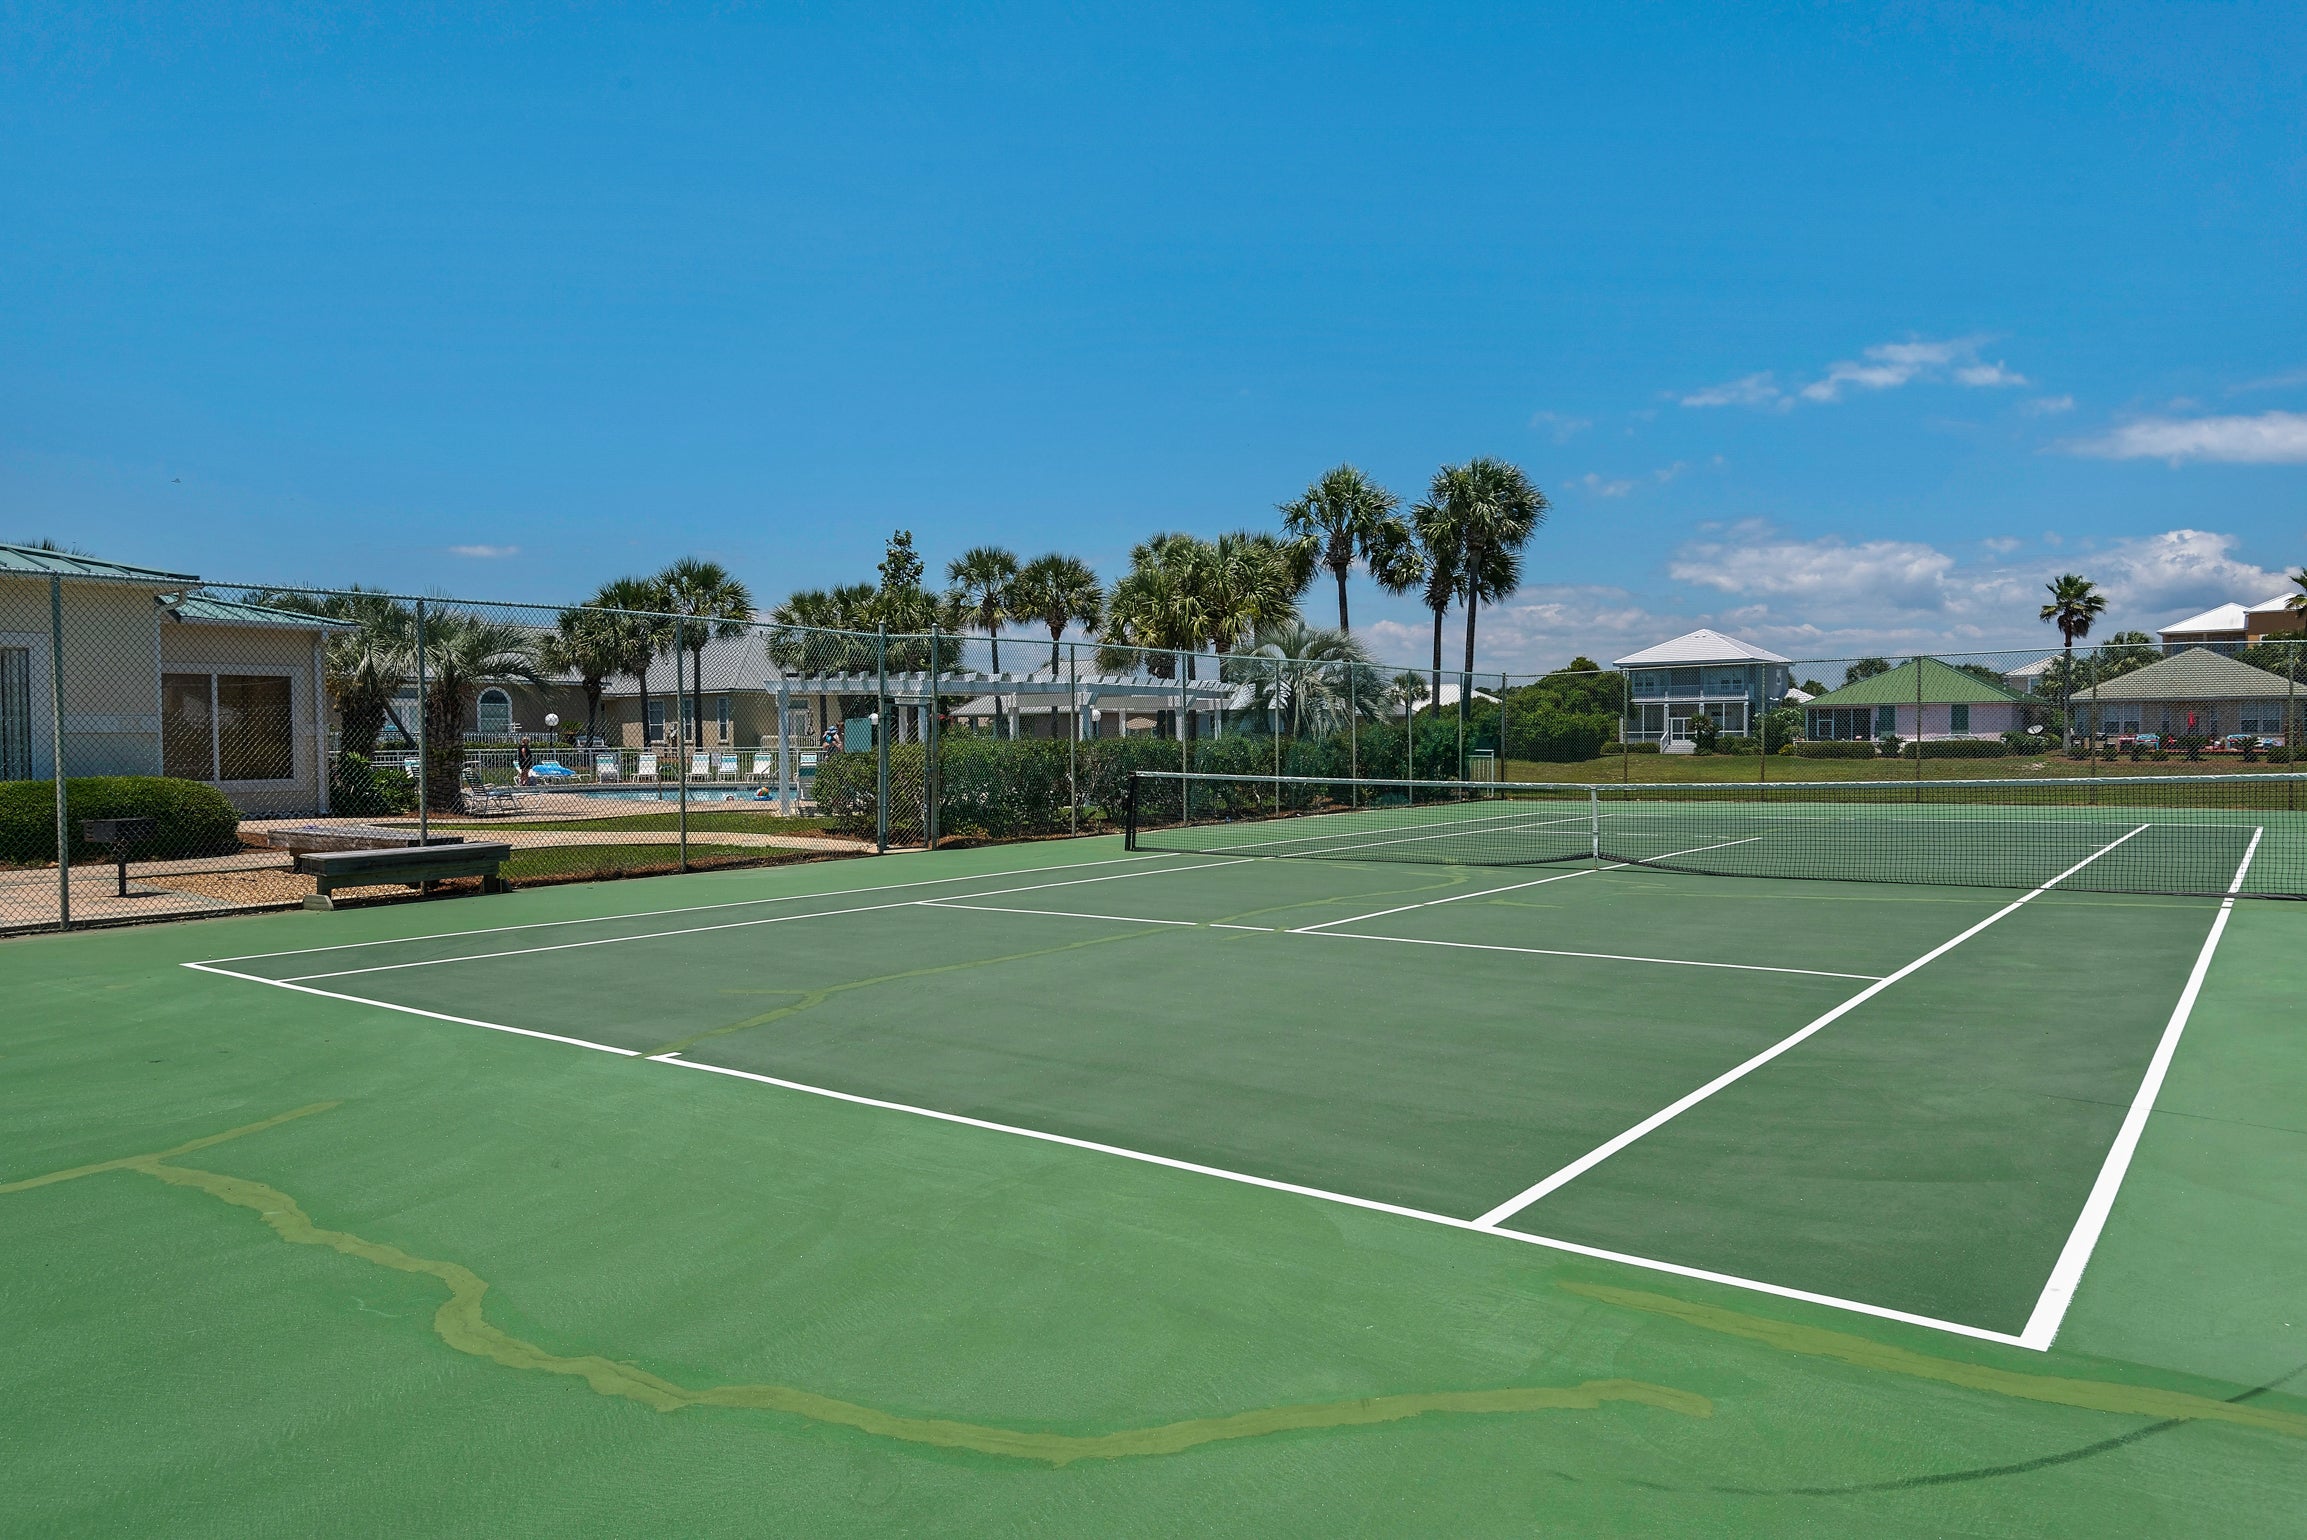 Maravilla Tennis courts